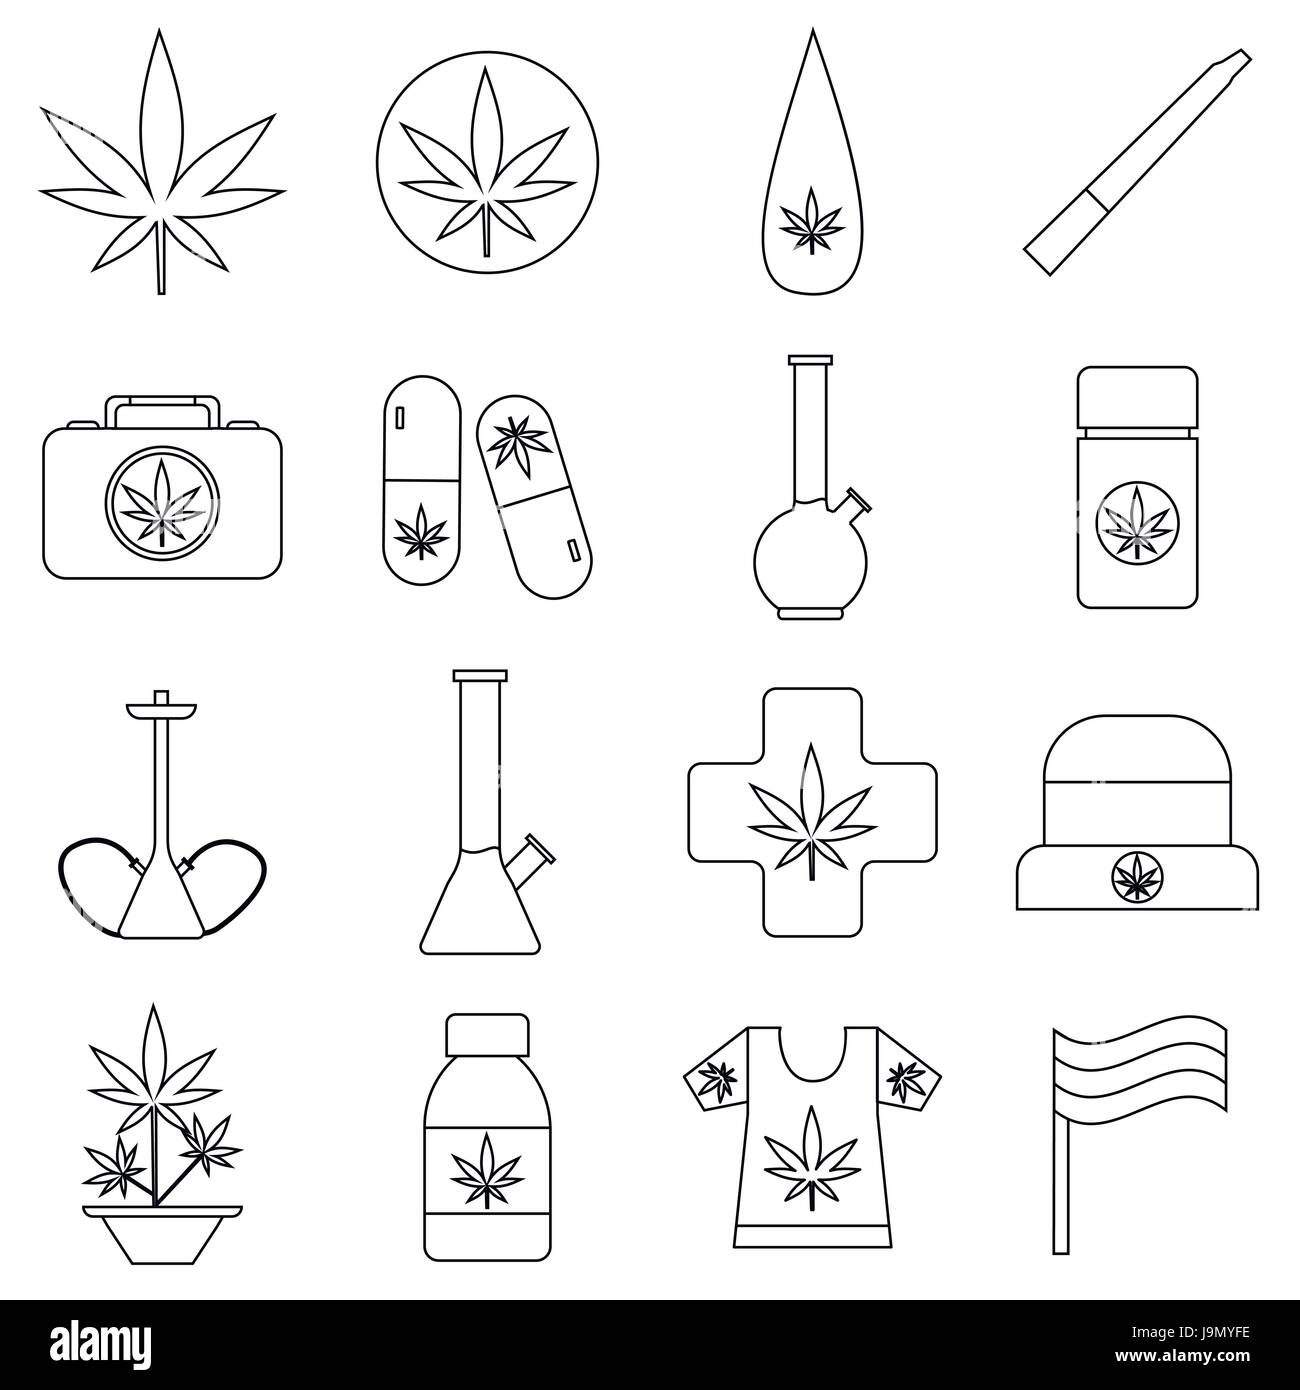 Marijuana icons set, outline style Stock Vector